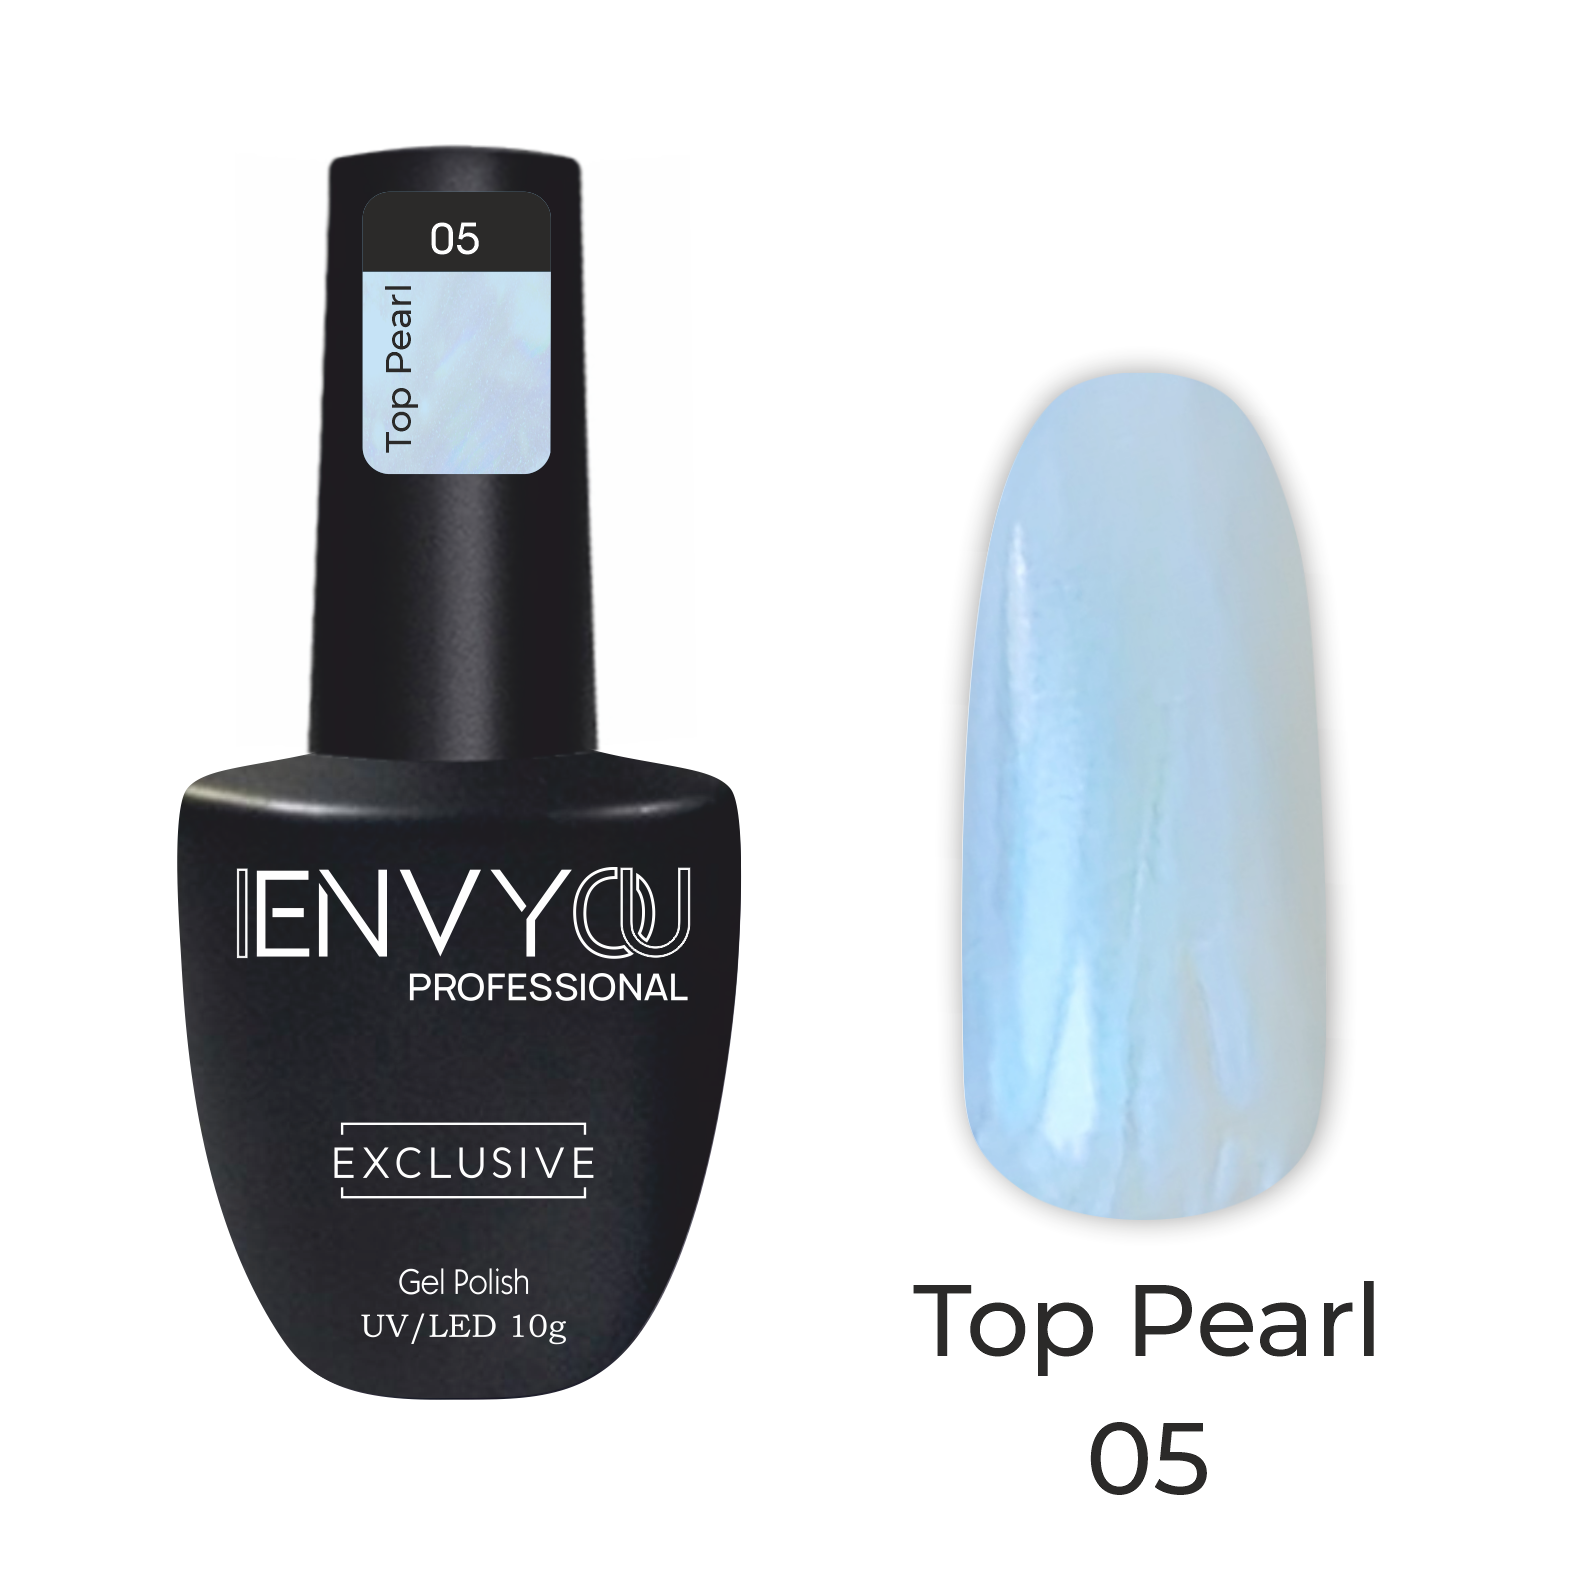 I Envy You, Top Pearl (10g) (05)